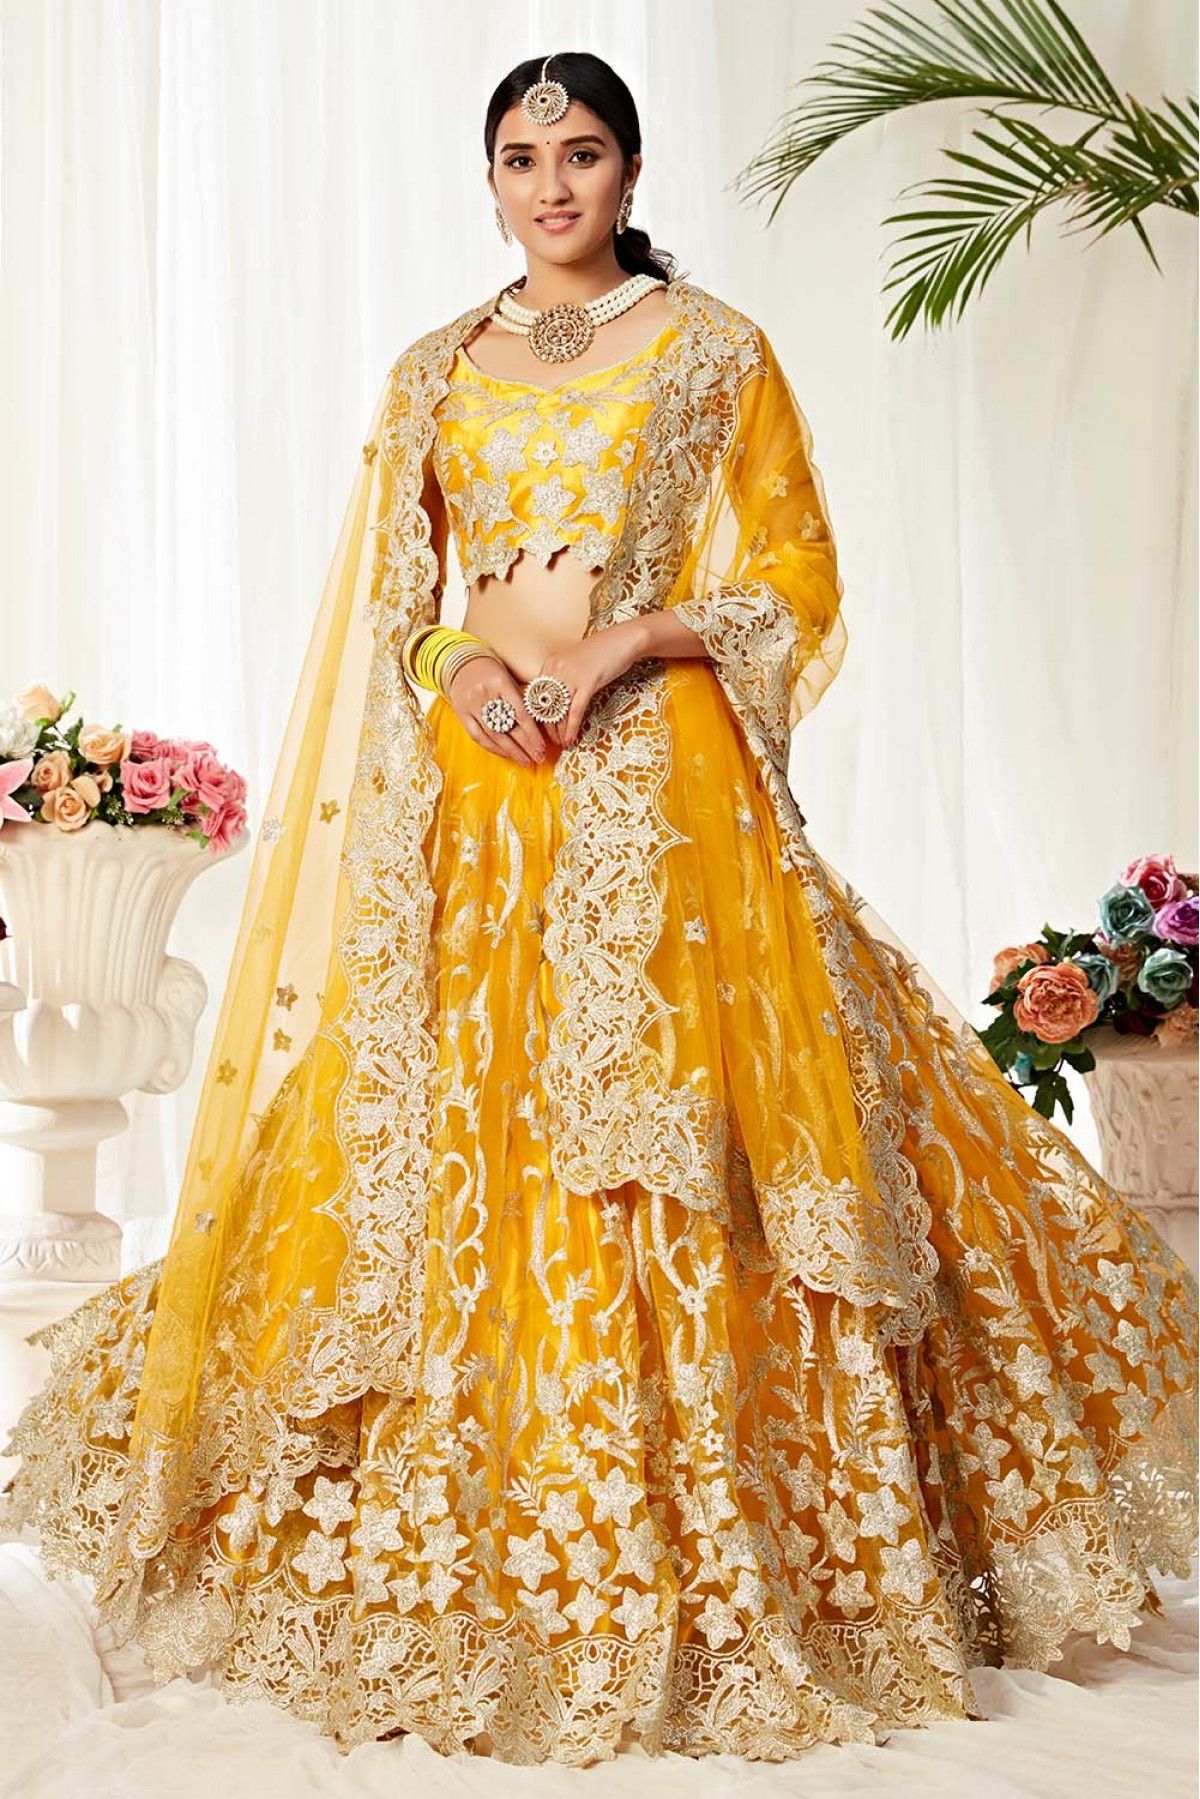 Royal Bridal Lehenga Choli in Yellow Color Vaishali Silk With Gota Patti  and Real Mirror Work Indian Bridal Lehenga Choli in USA, UK, Malaysia,  South Africa, Dubai, Singapore